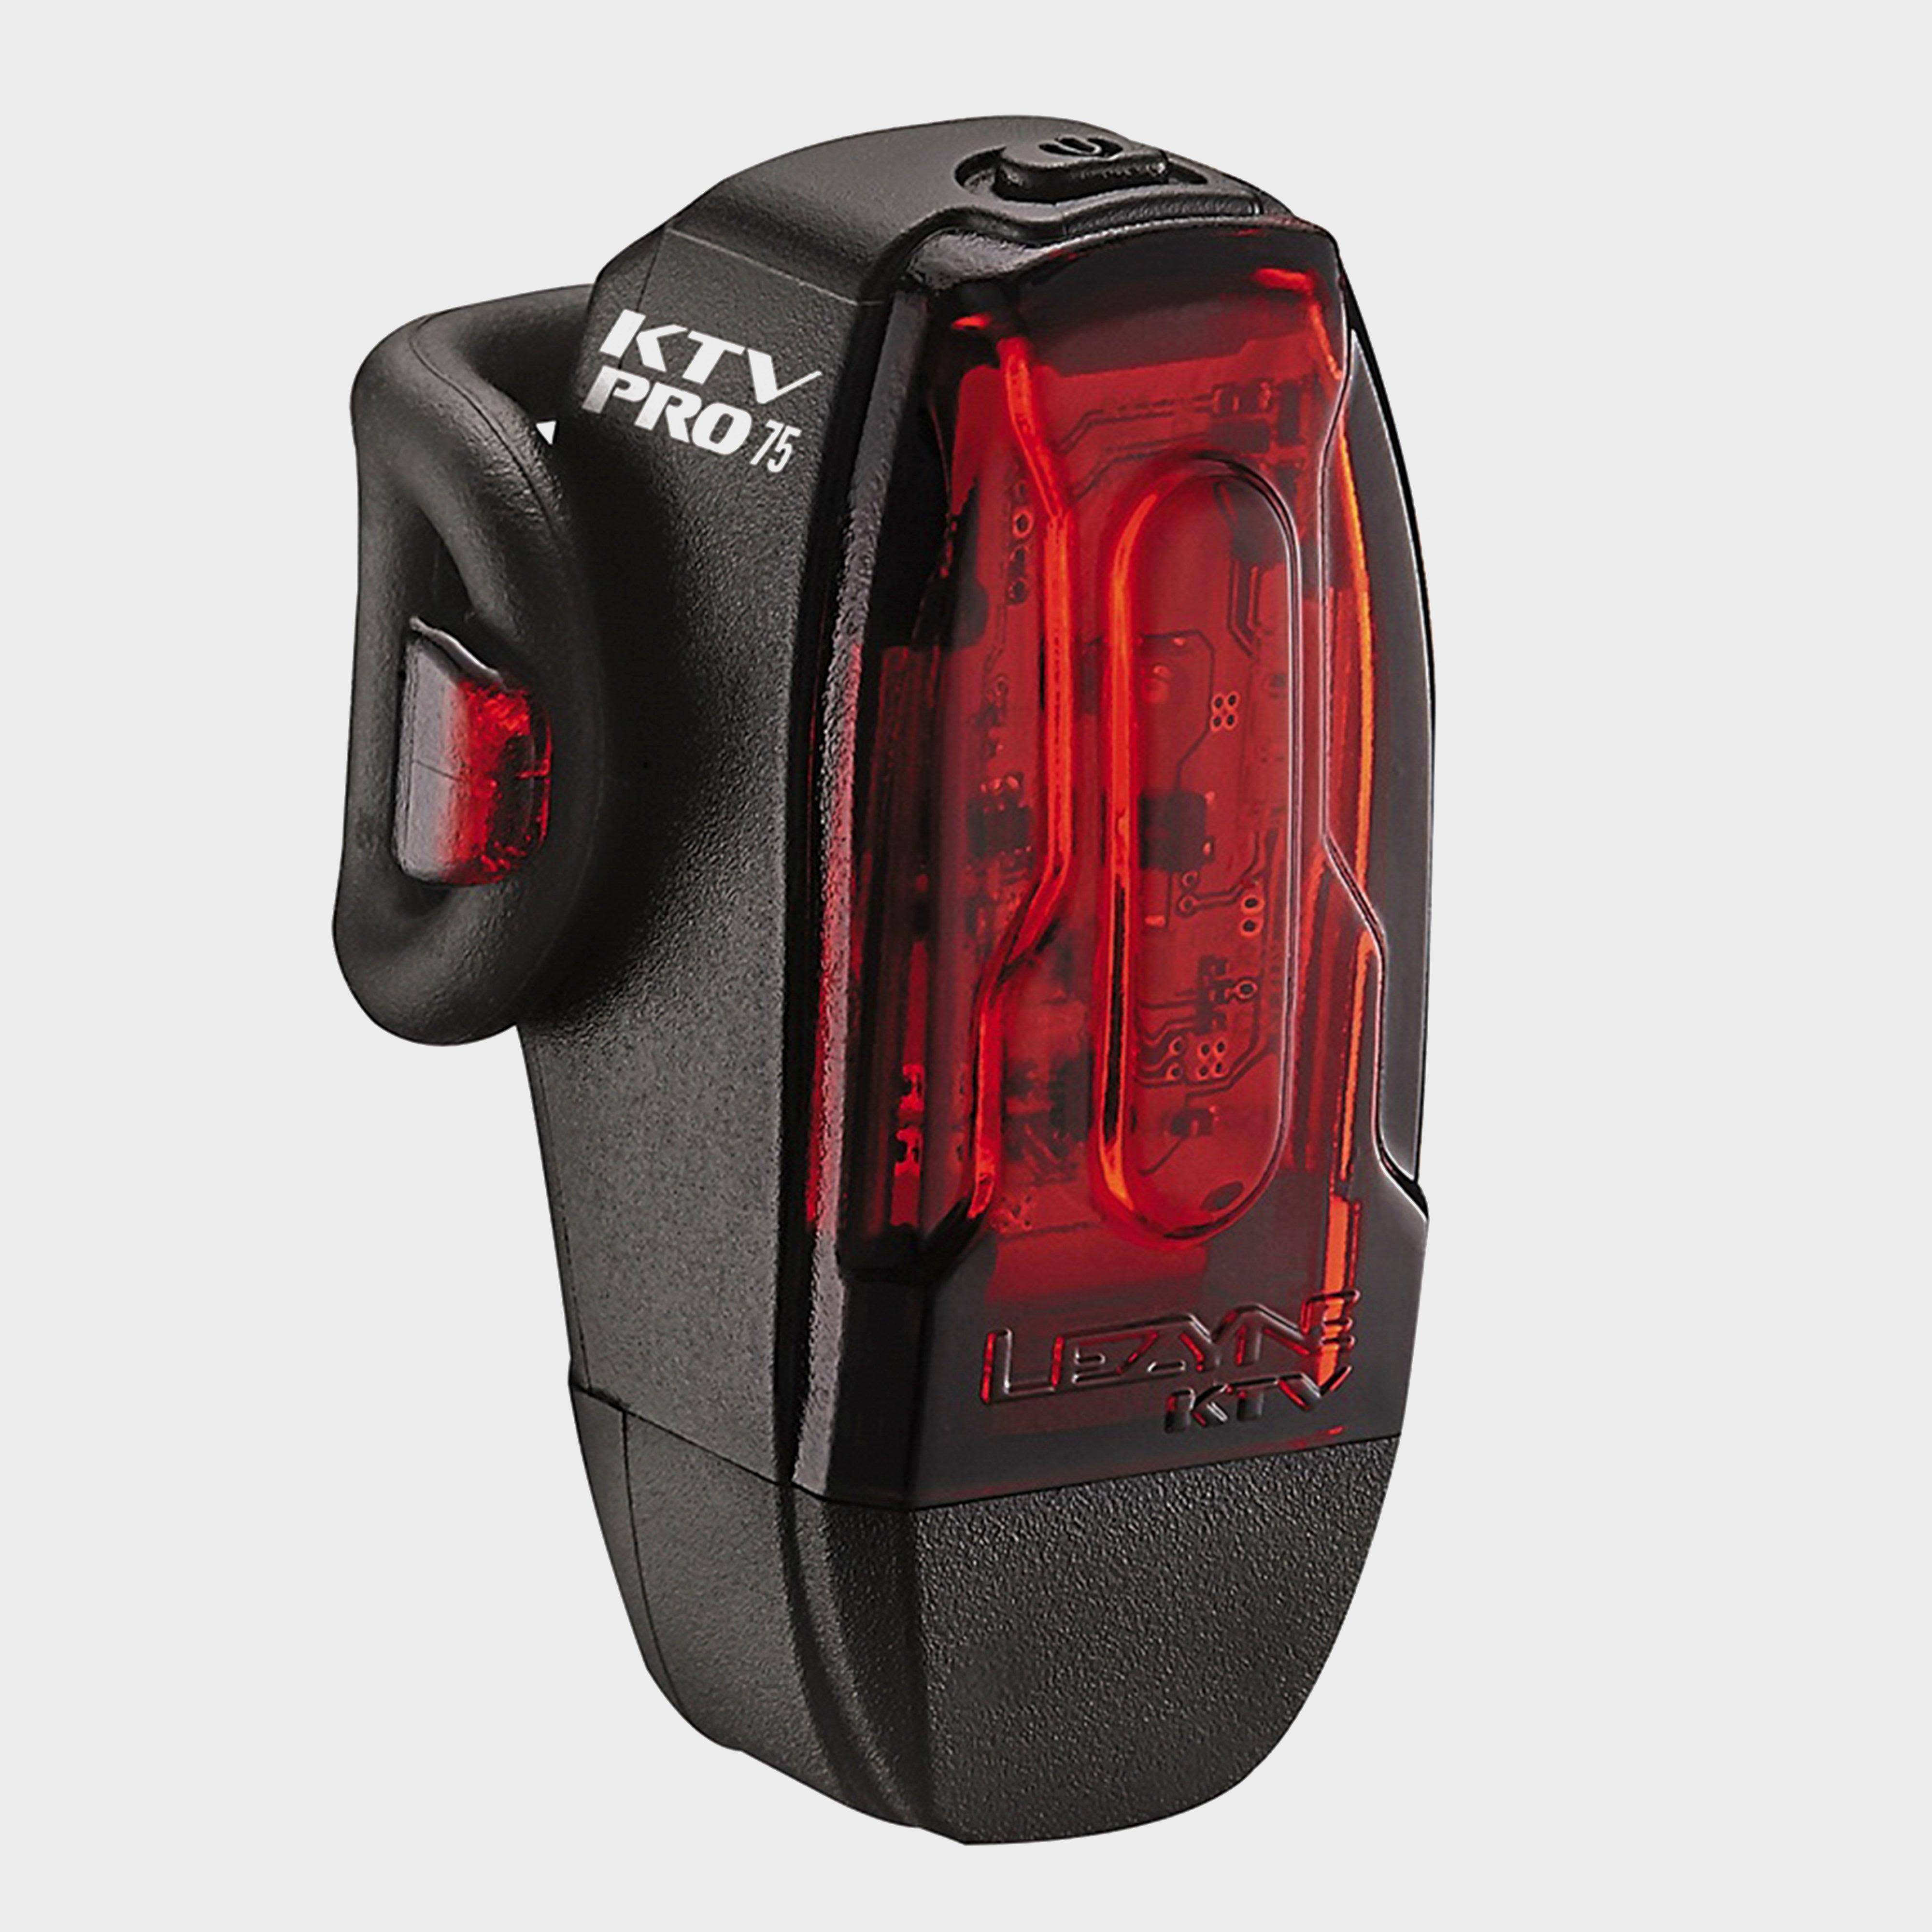 Lezyne KTV Drive Pro Rear Bike Cycling LED Light - Black